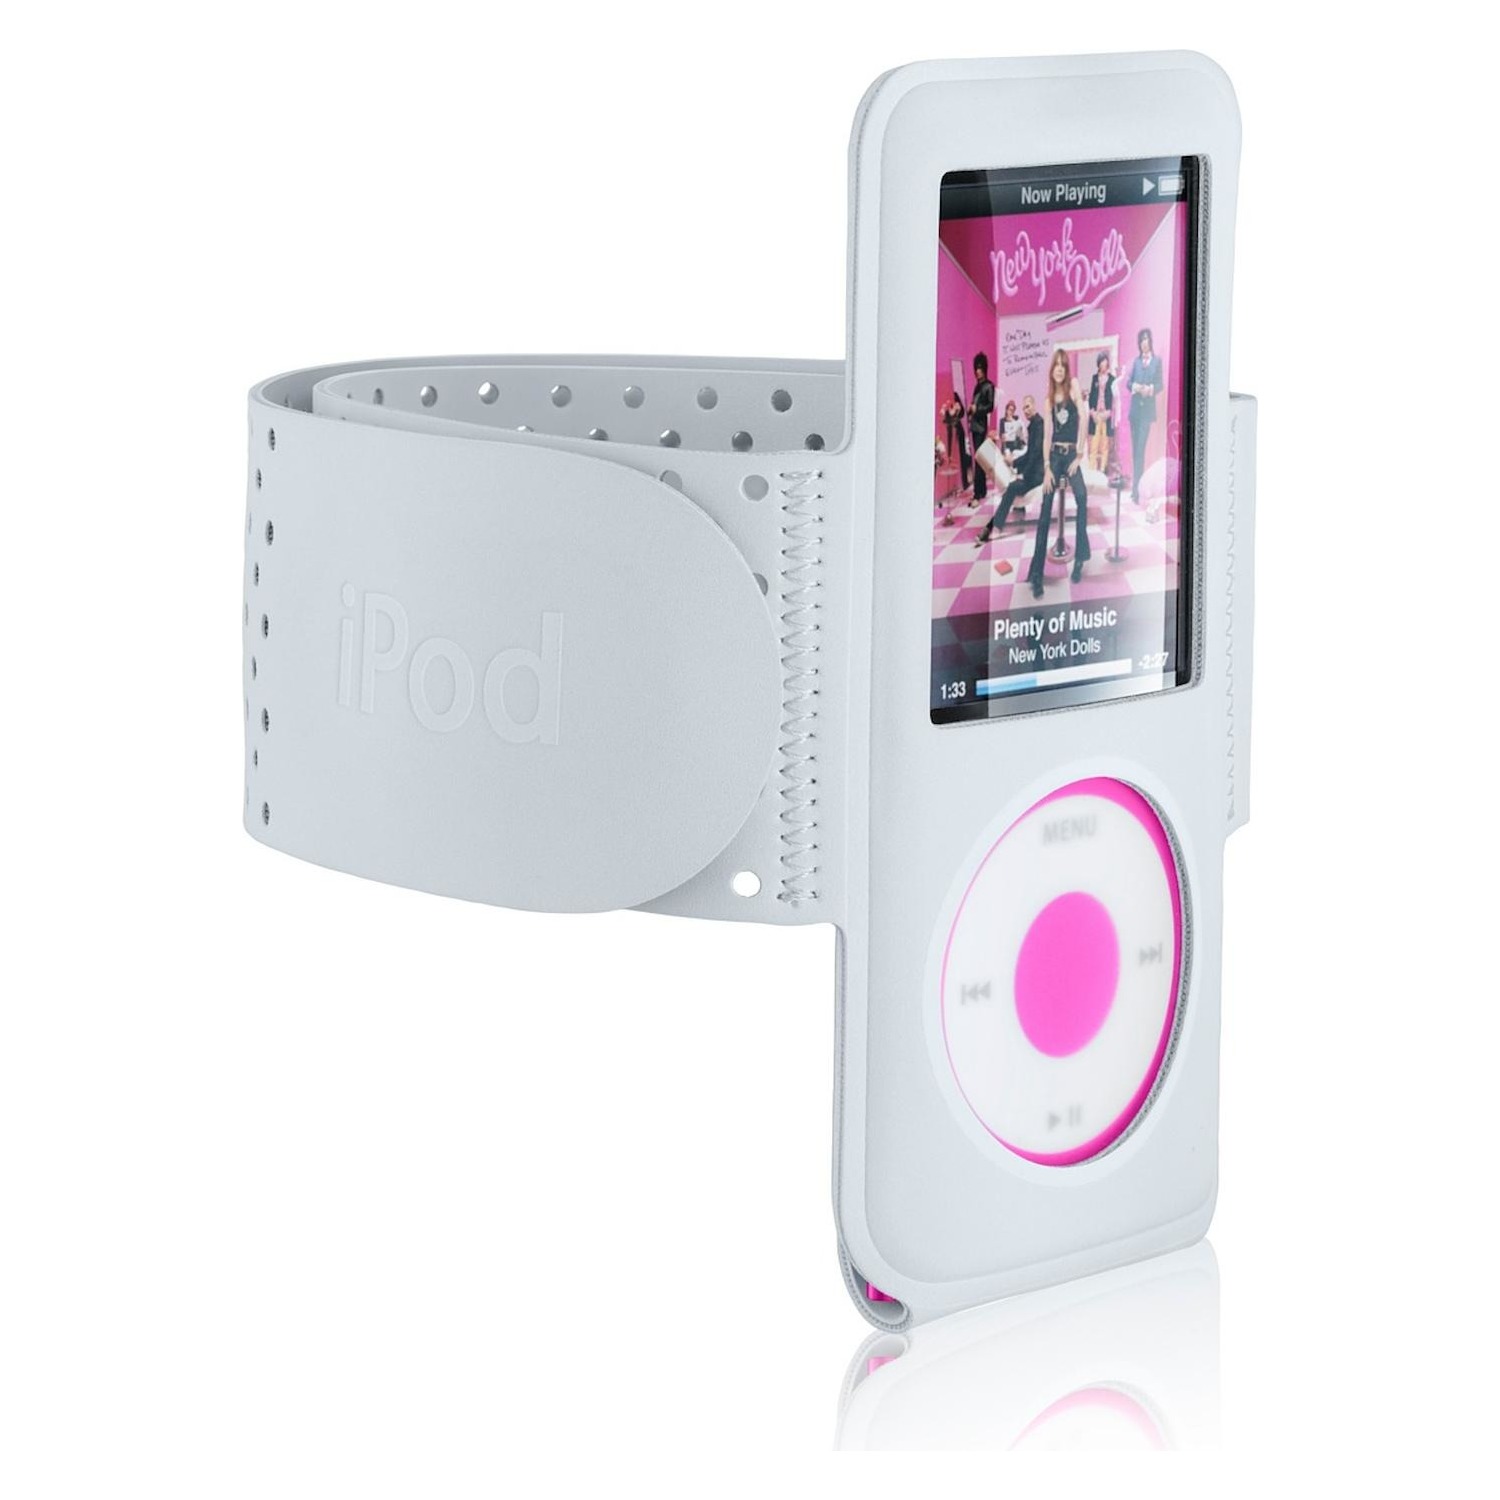 Immagine per Fascia braccio per iPod nano 4G. EM081028502 da DIMOStore